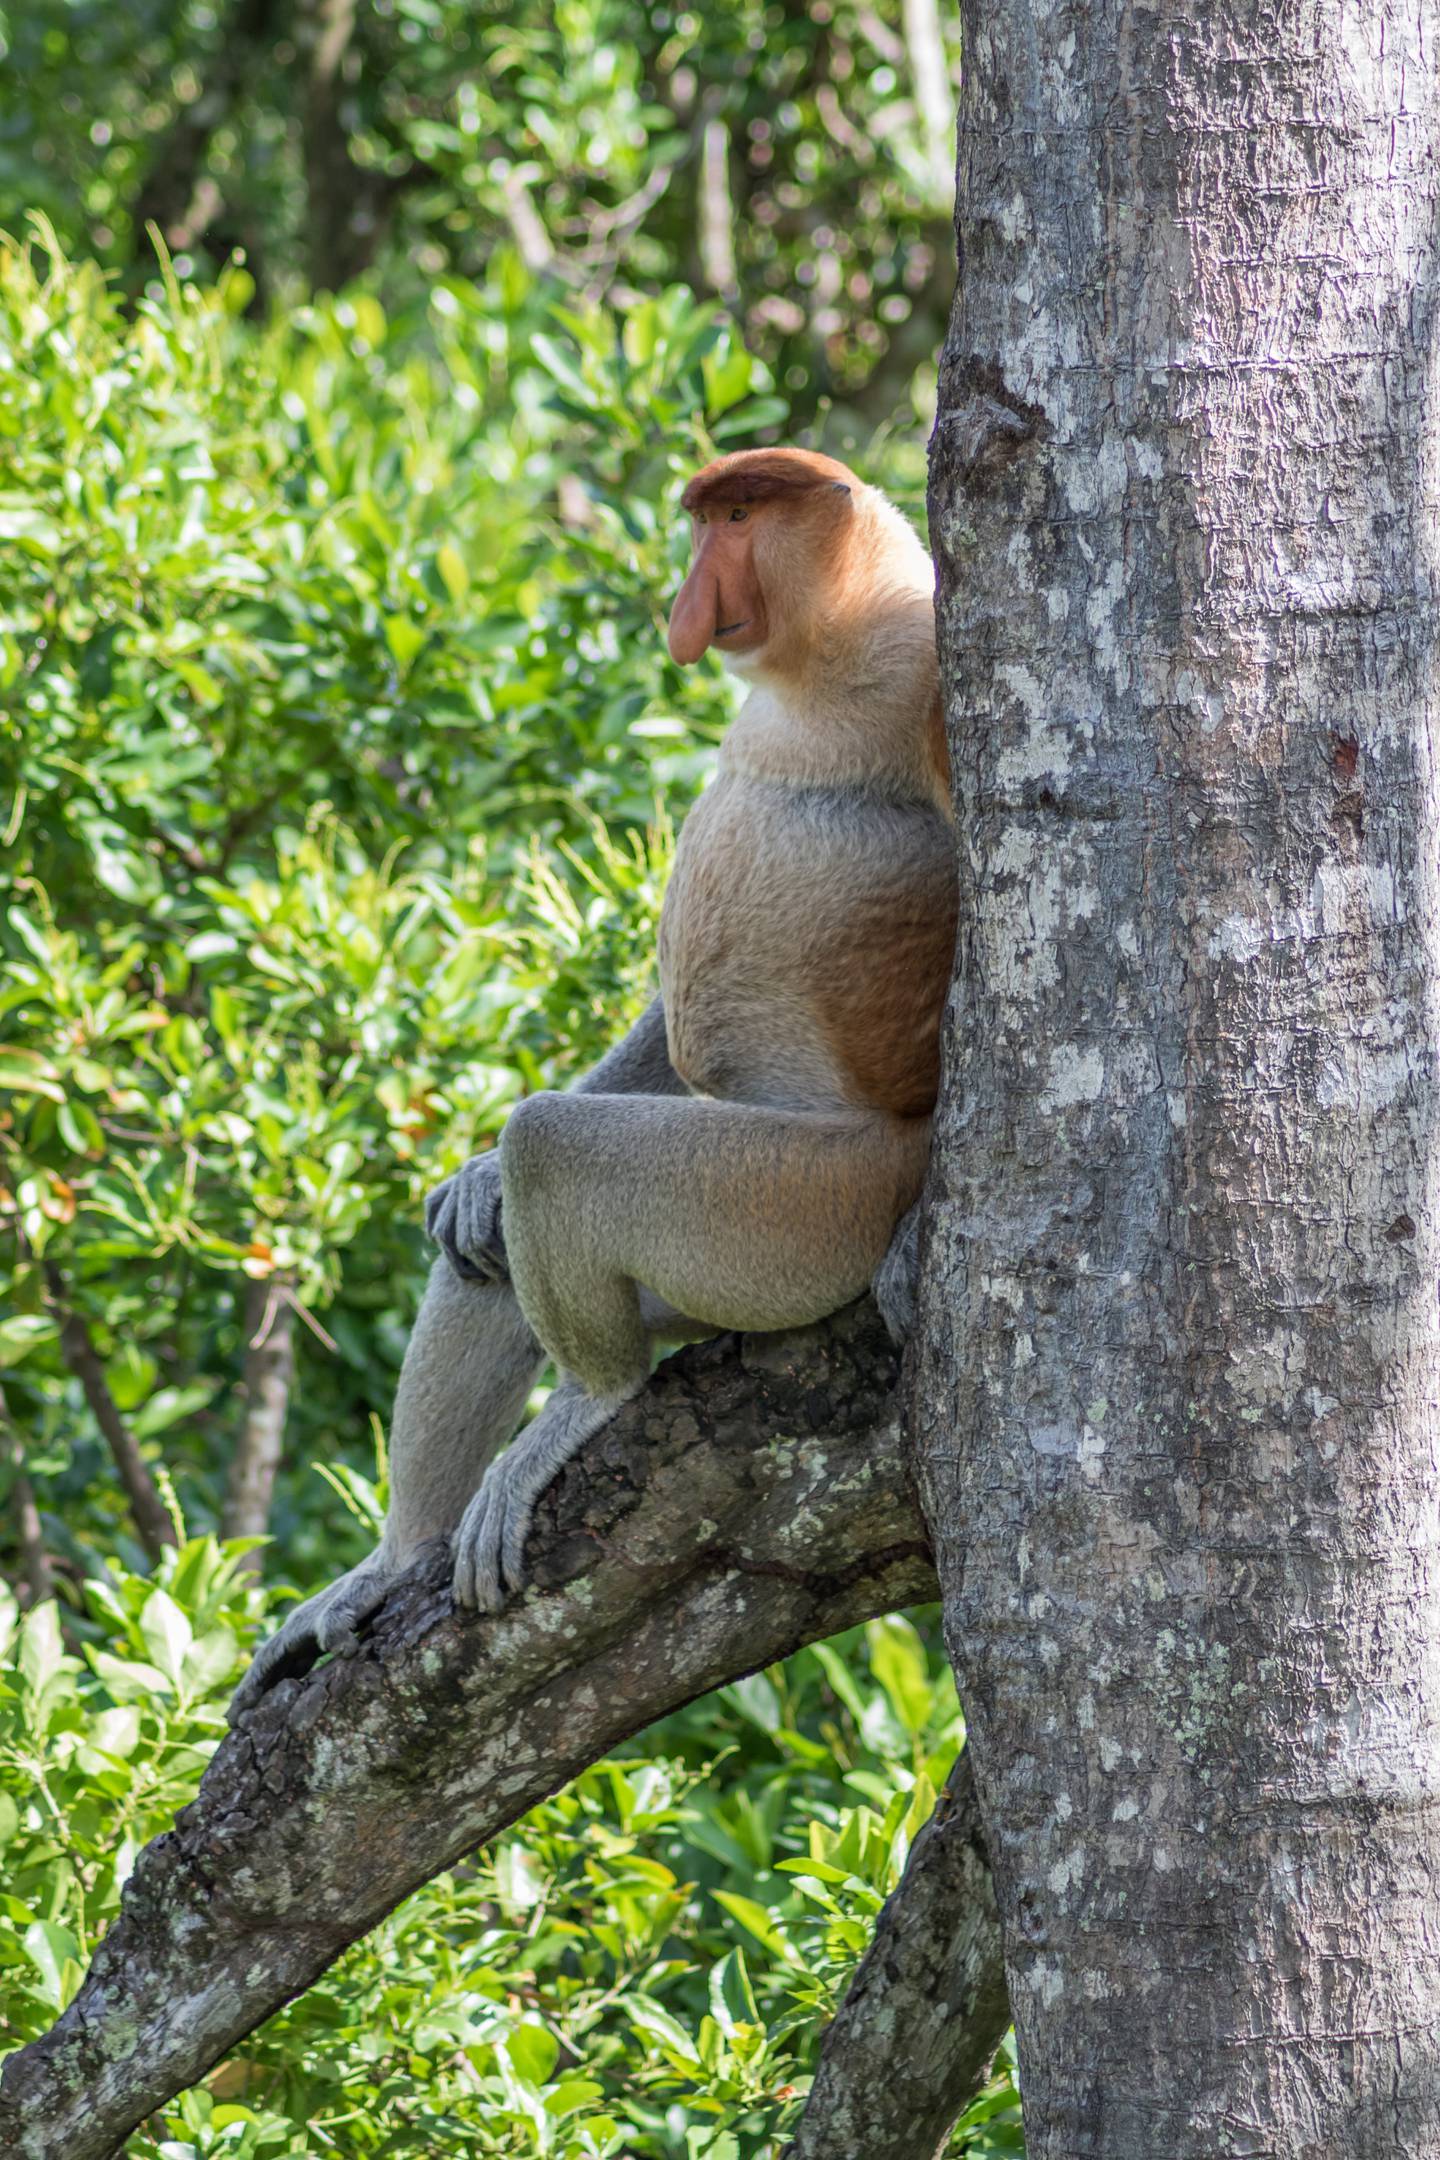 The endangered proboscis monkey. Photo: Andre Mouton / Unsplash